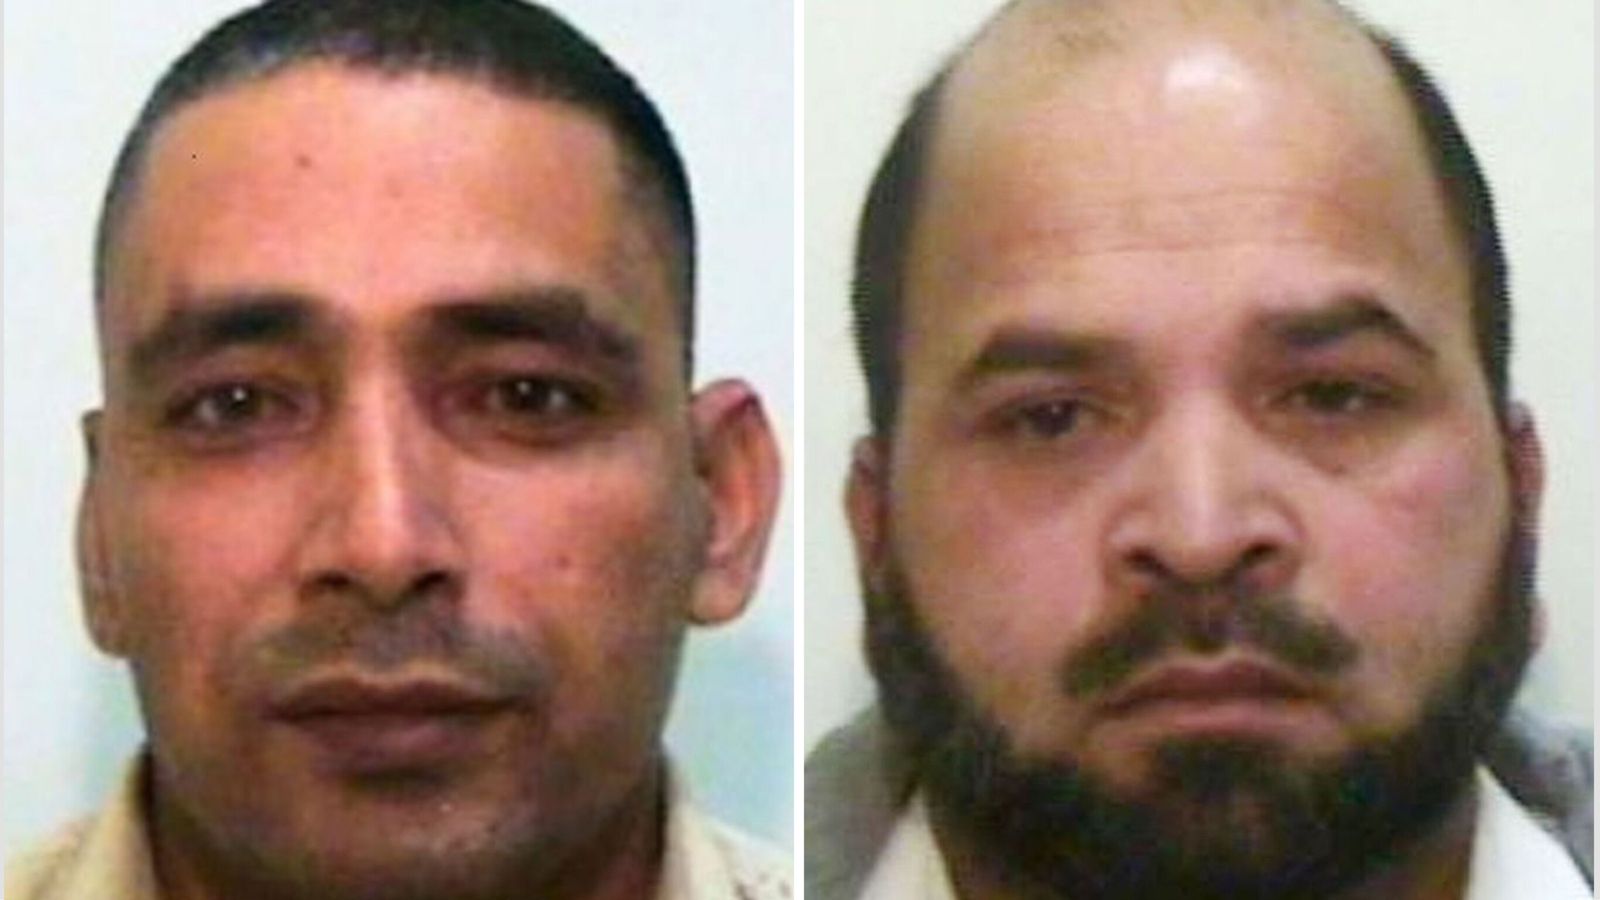 Rochdale grooming gang members Adil Khan and Qari Abdul Rauf lose appeal against deportation to Pakistan